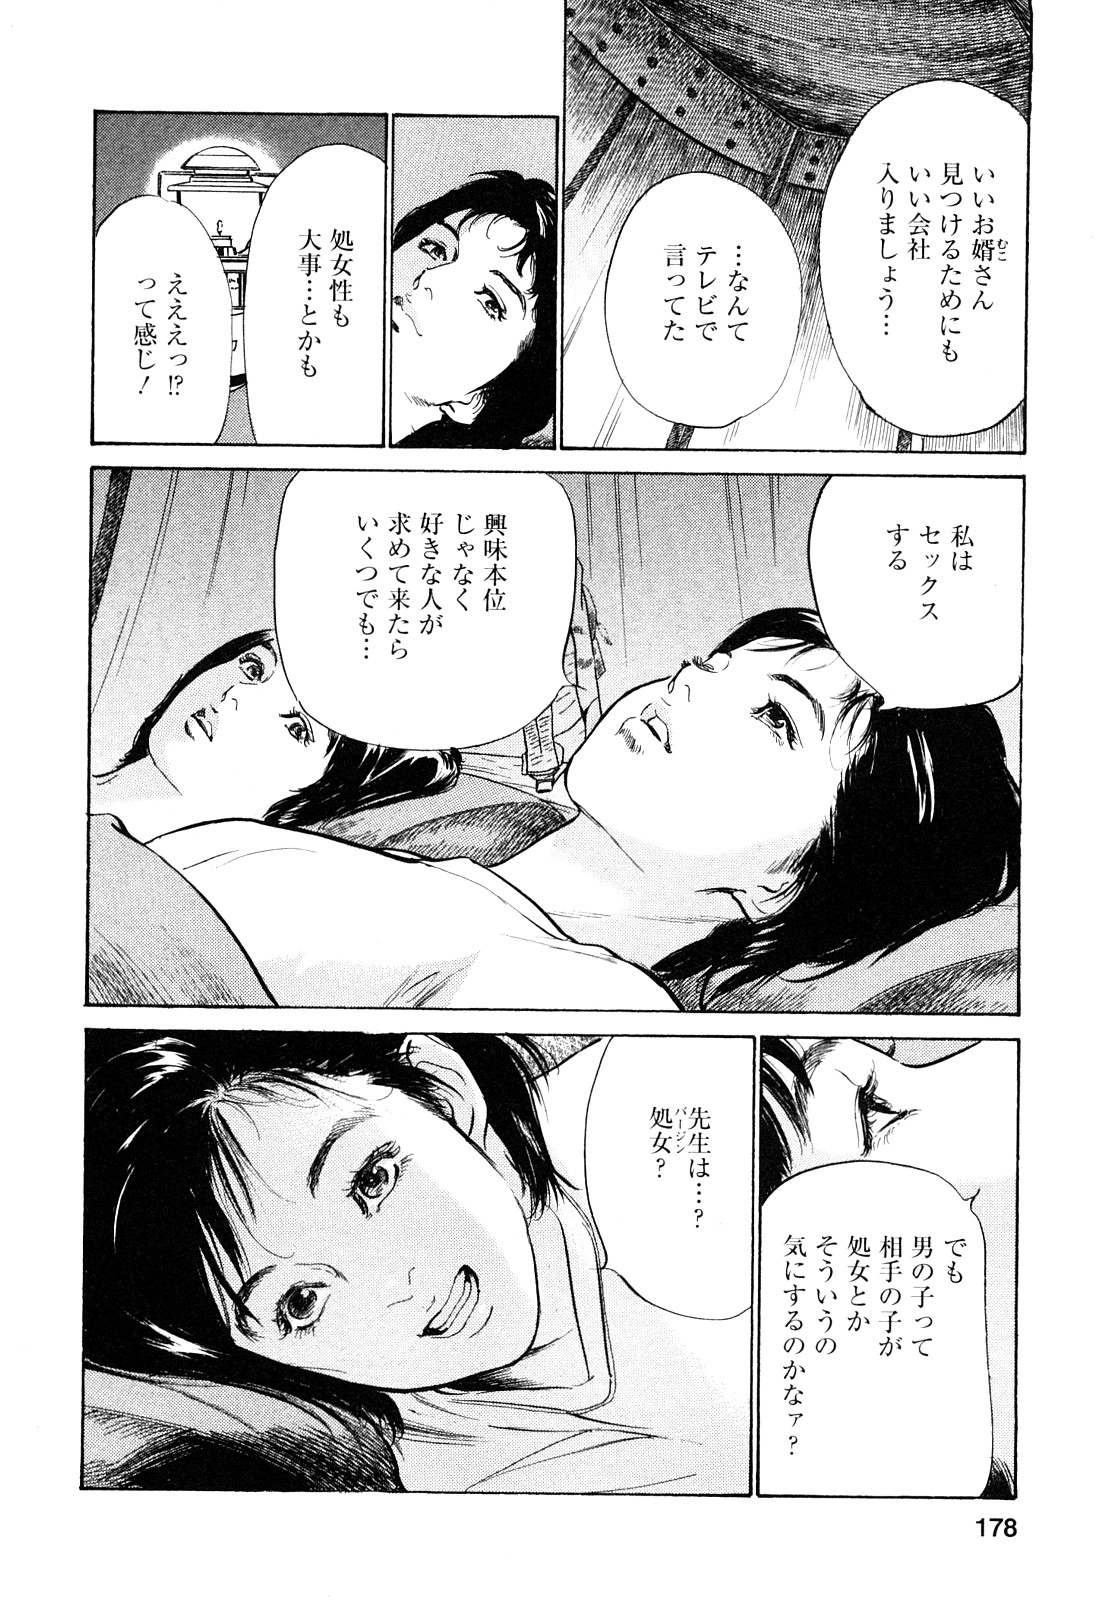 [Tomisawa Chinatsu, Hazuki Kaoru] My Pure Lady Vol.8 [とみさわ千夏, 八月薫] お願いサプリマン My Pure Lady [マイピュアレディ] 第8巻